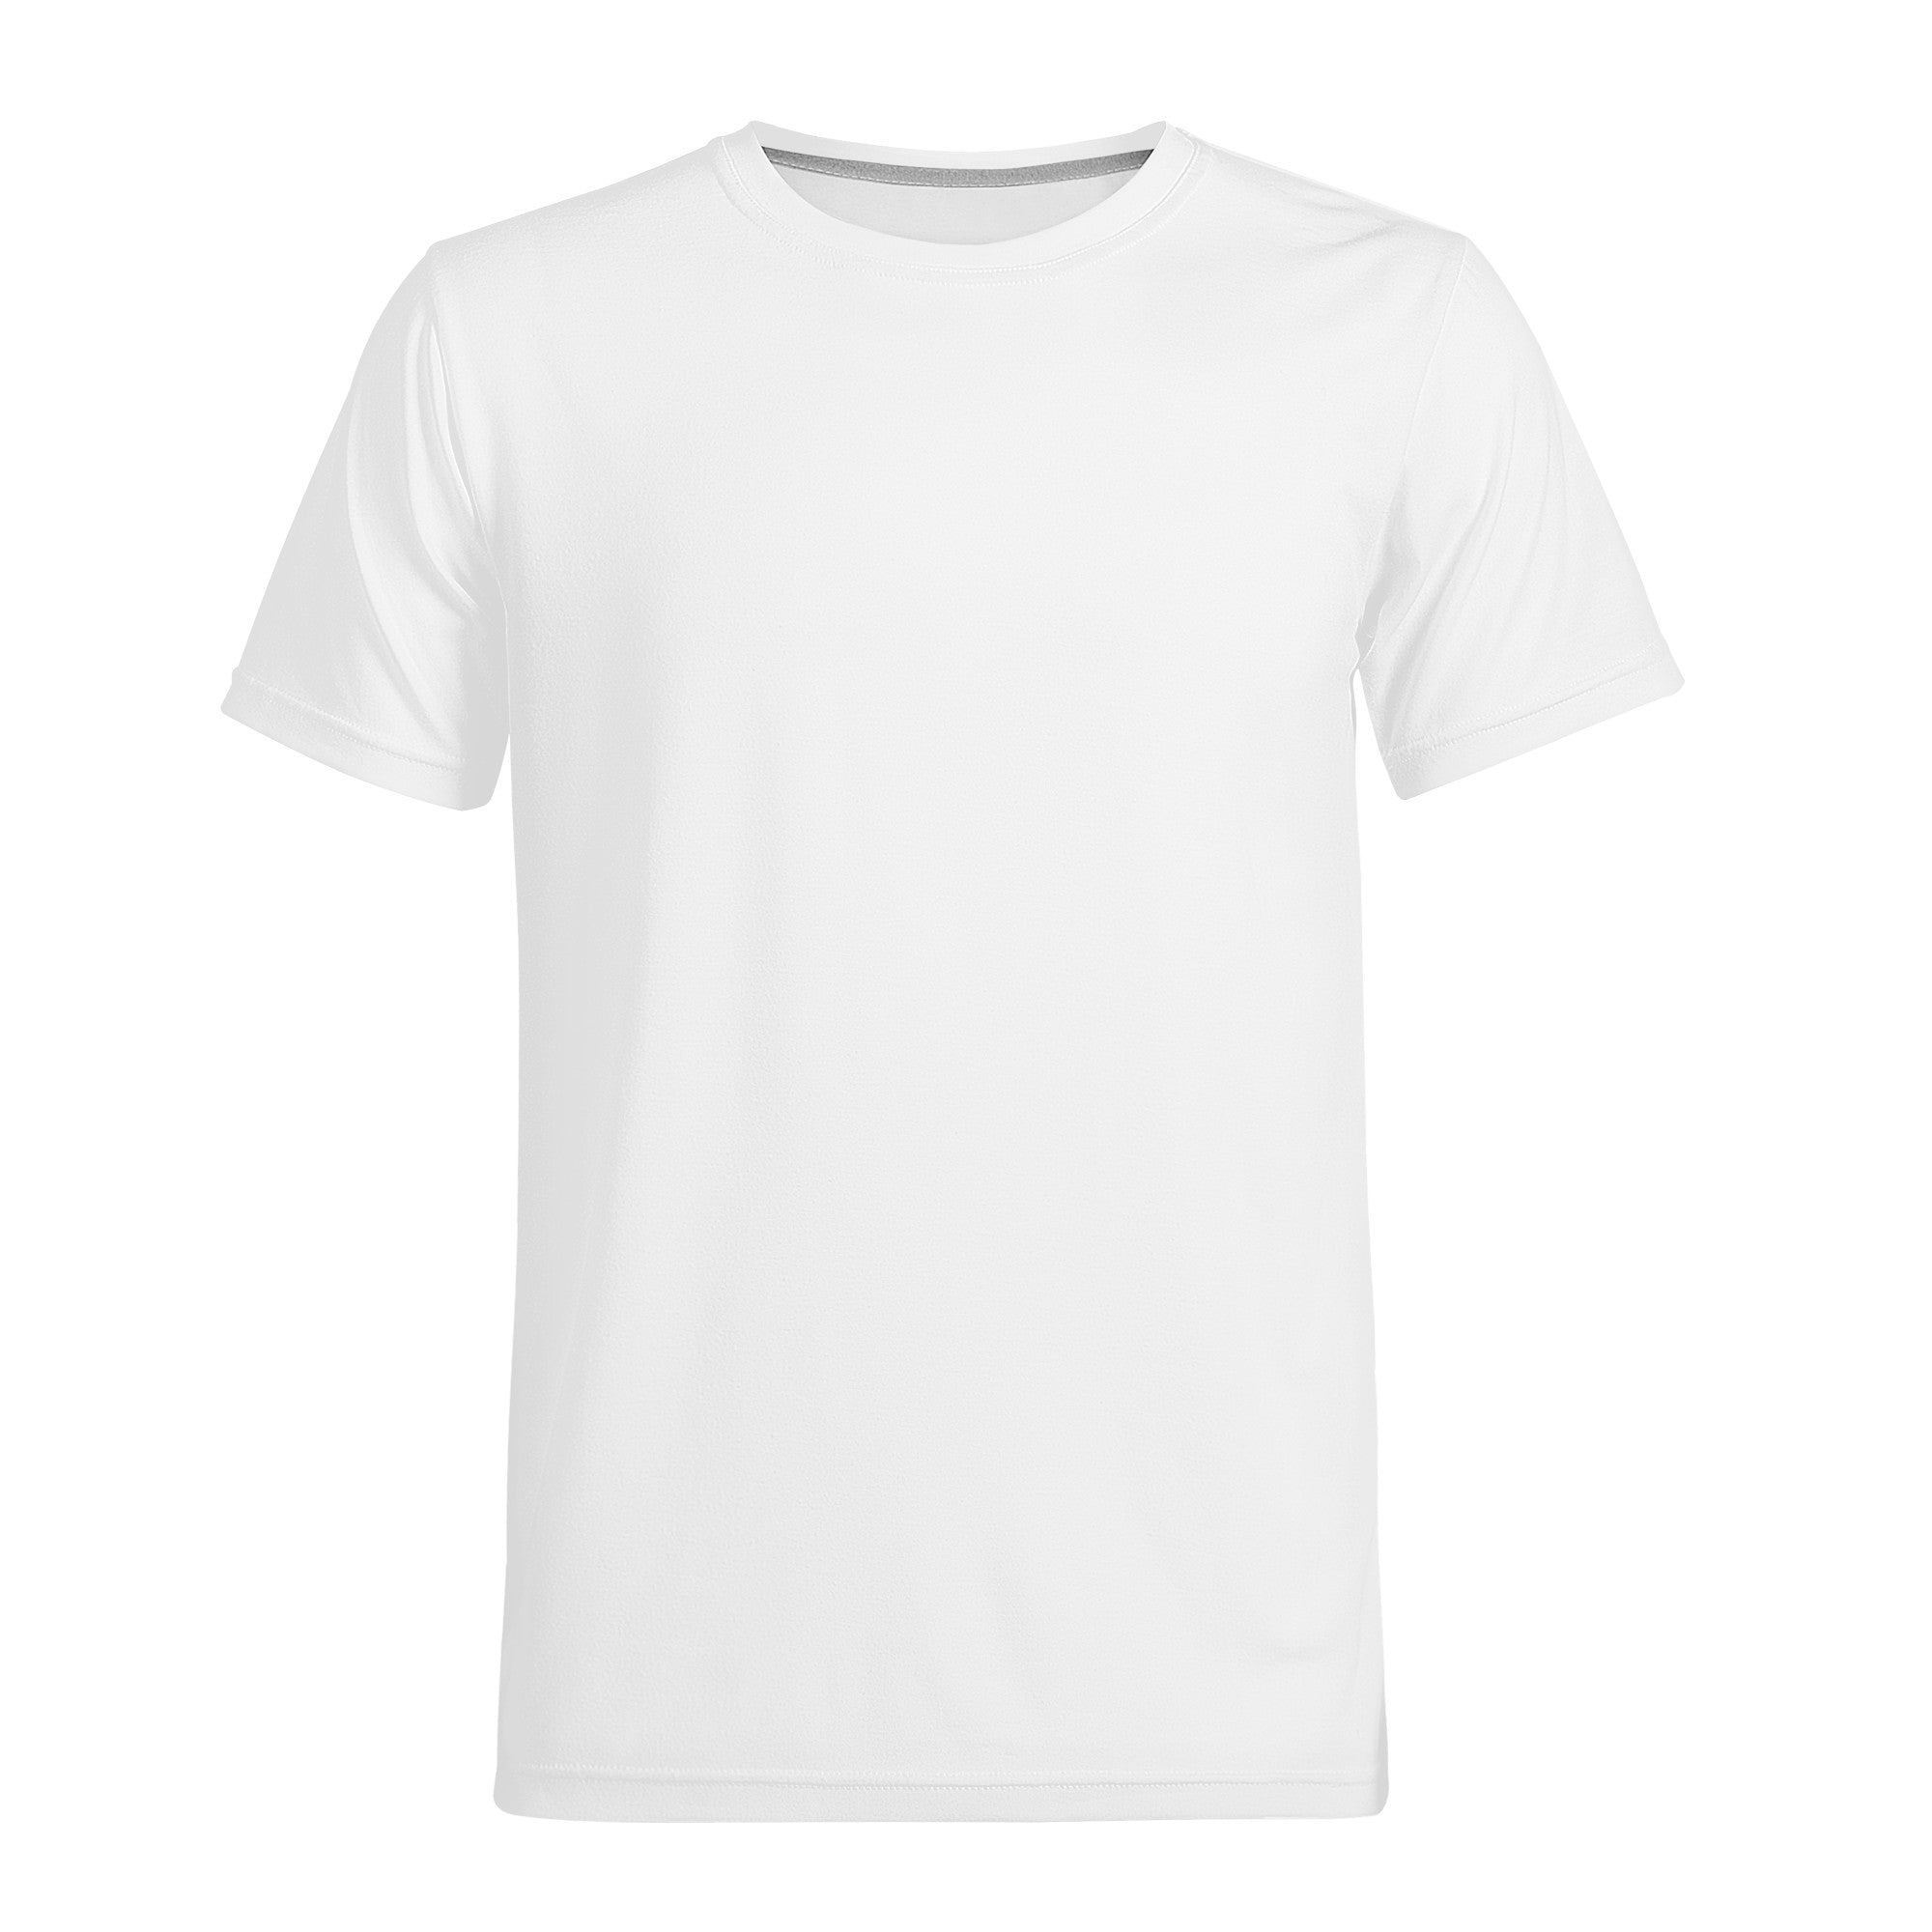 D61 Men's All Over Print T-Shirt